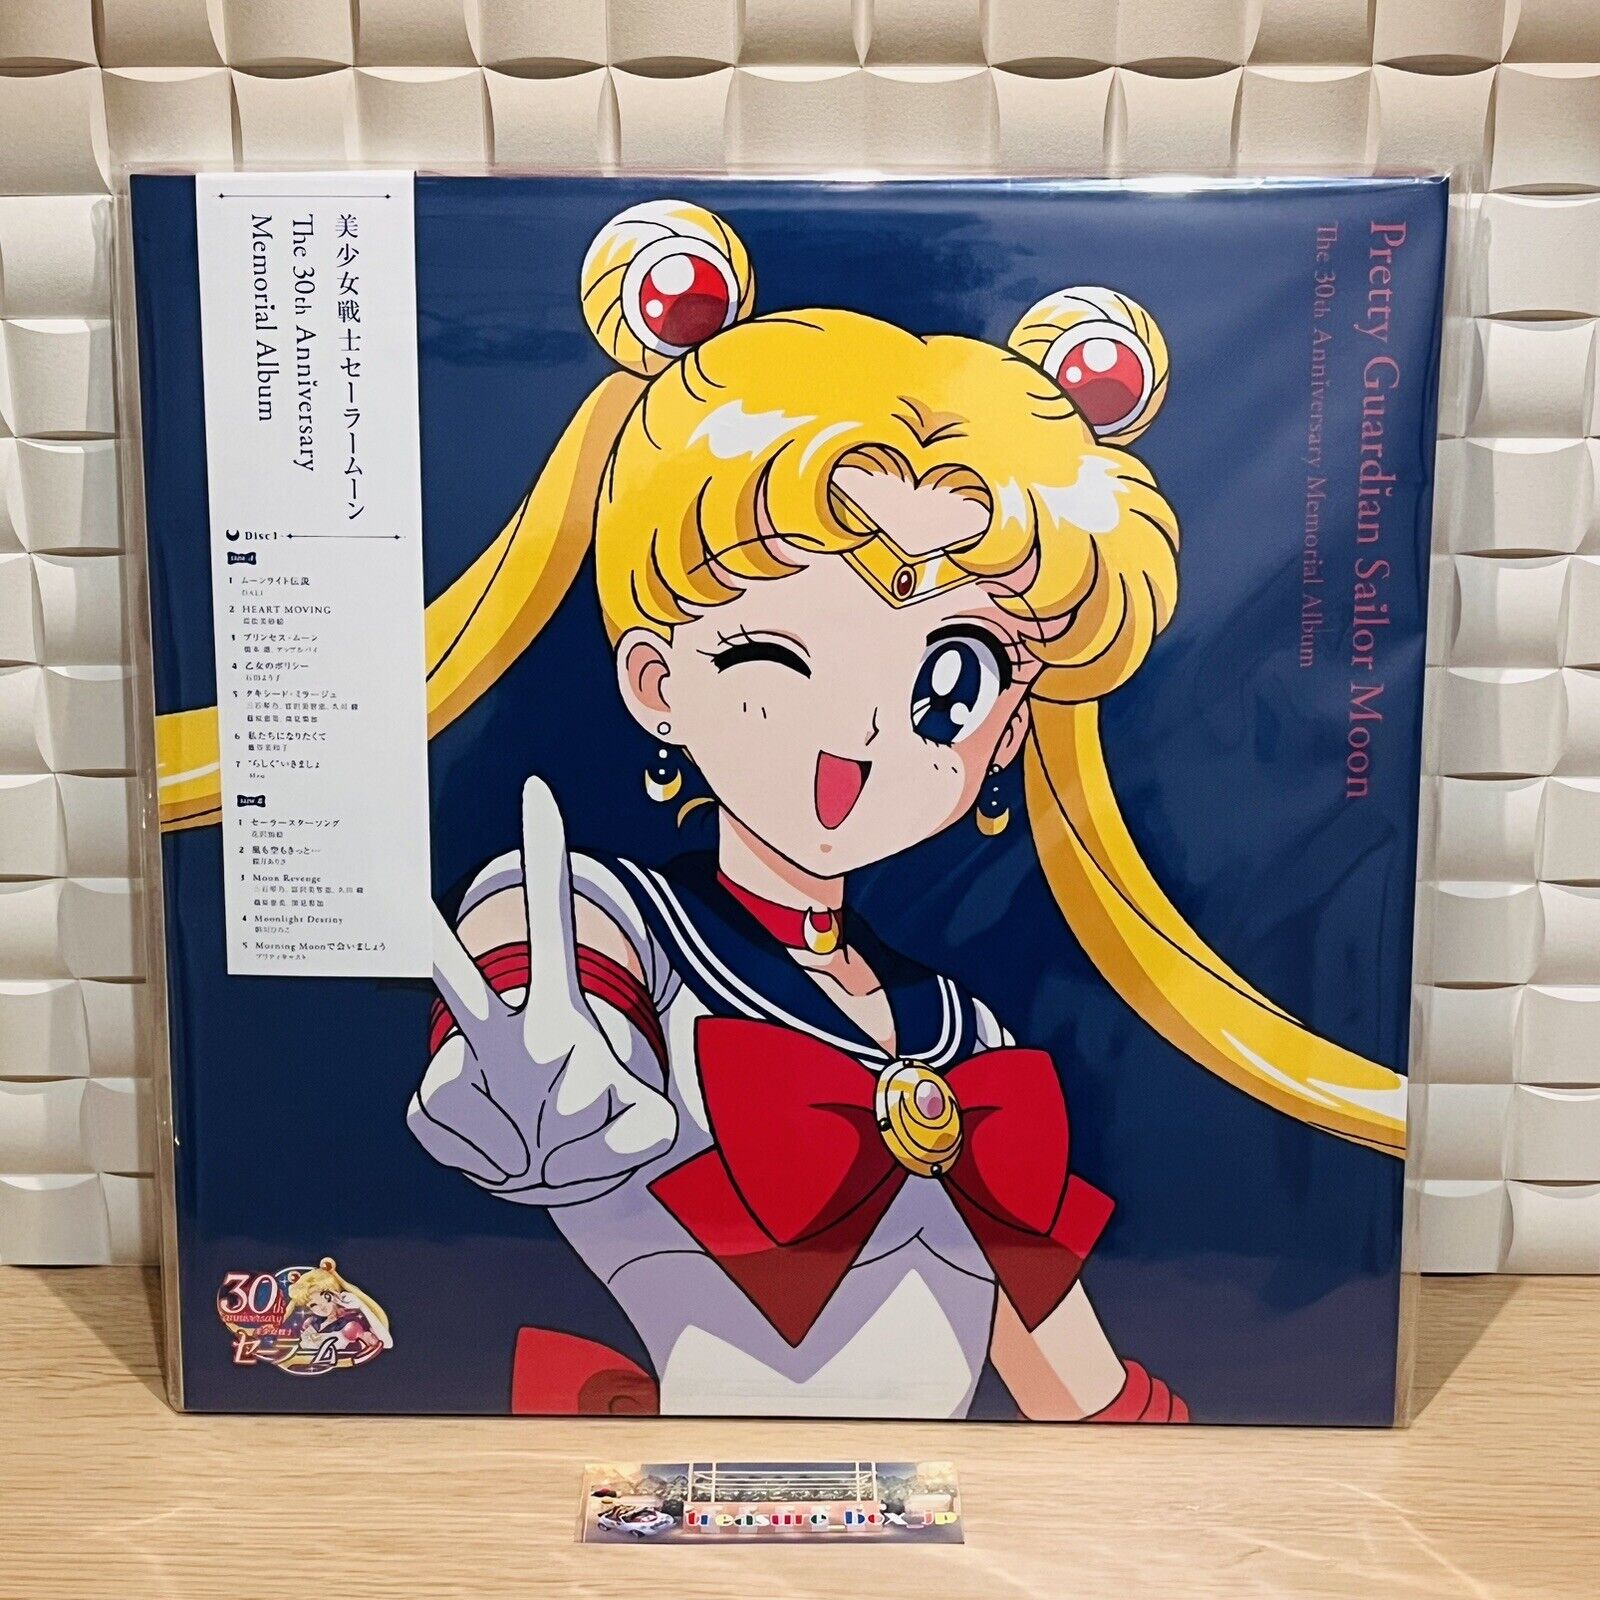 Sailor Moon The 30th Anniversary Memorial Album Color Vinyl Japan LP Record F/S